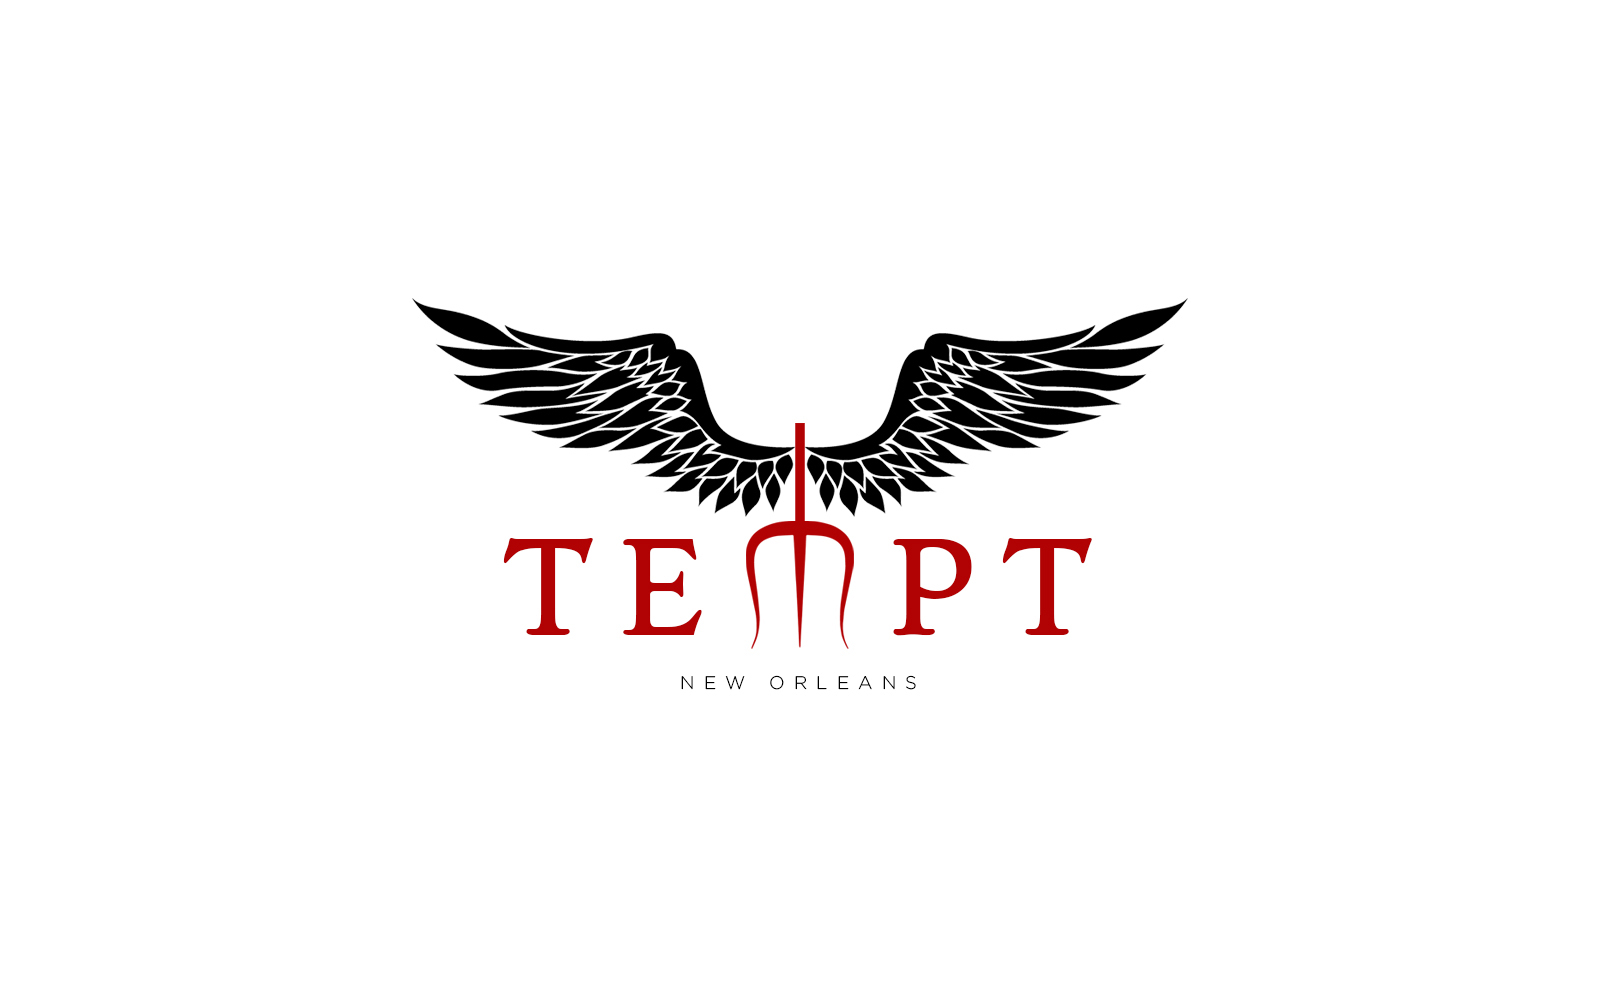 Logo, Web Design, Brand Development & Professional Photography for Restaurants - Tempt - Palm Island Creative